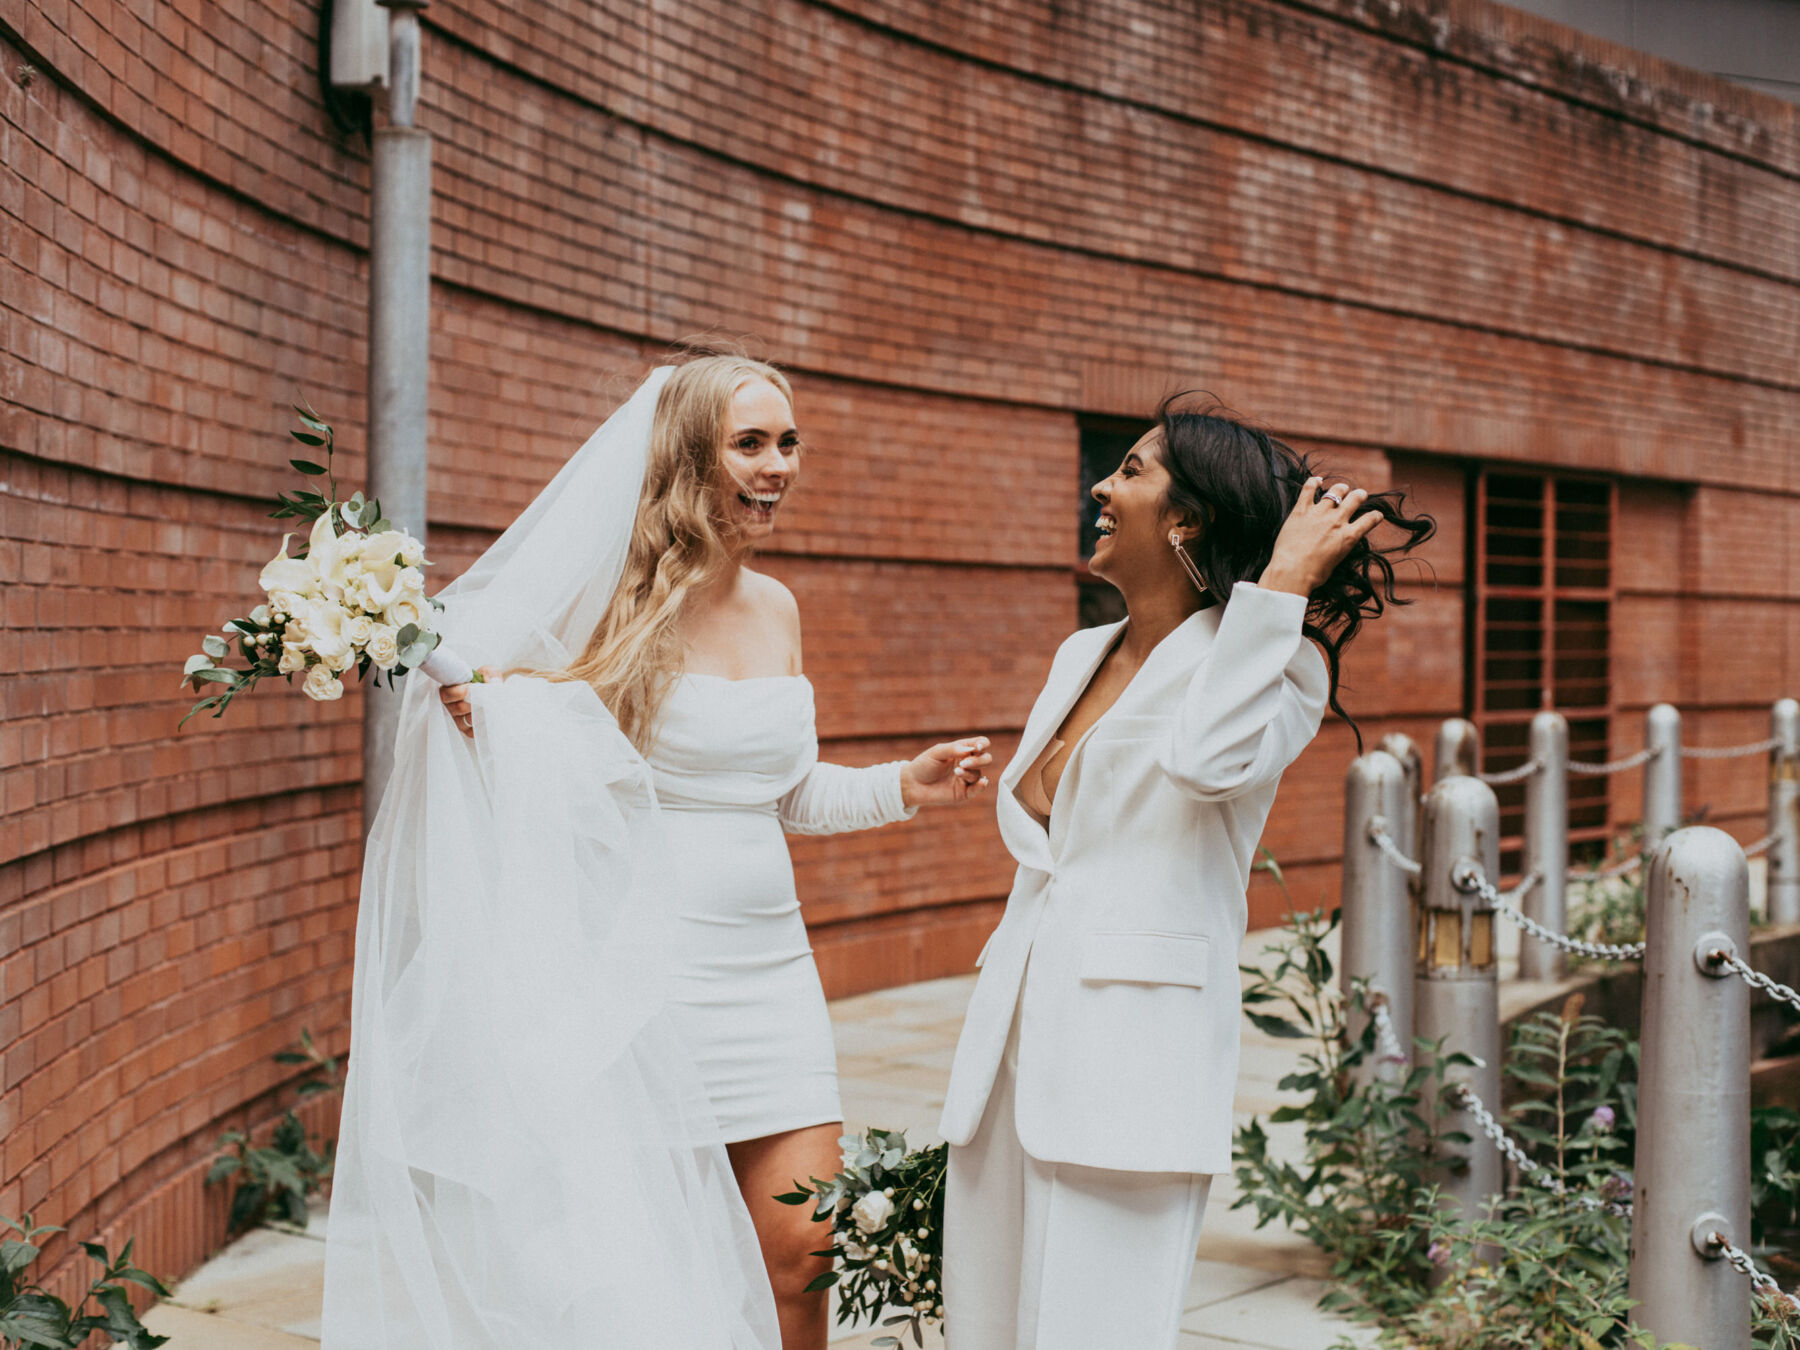 Same sex wedding. Lesbian bride in short dress. Lesbian bride in suit.  Daniel Mice Photography.